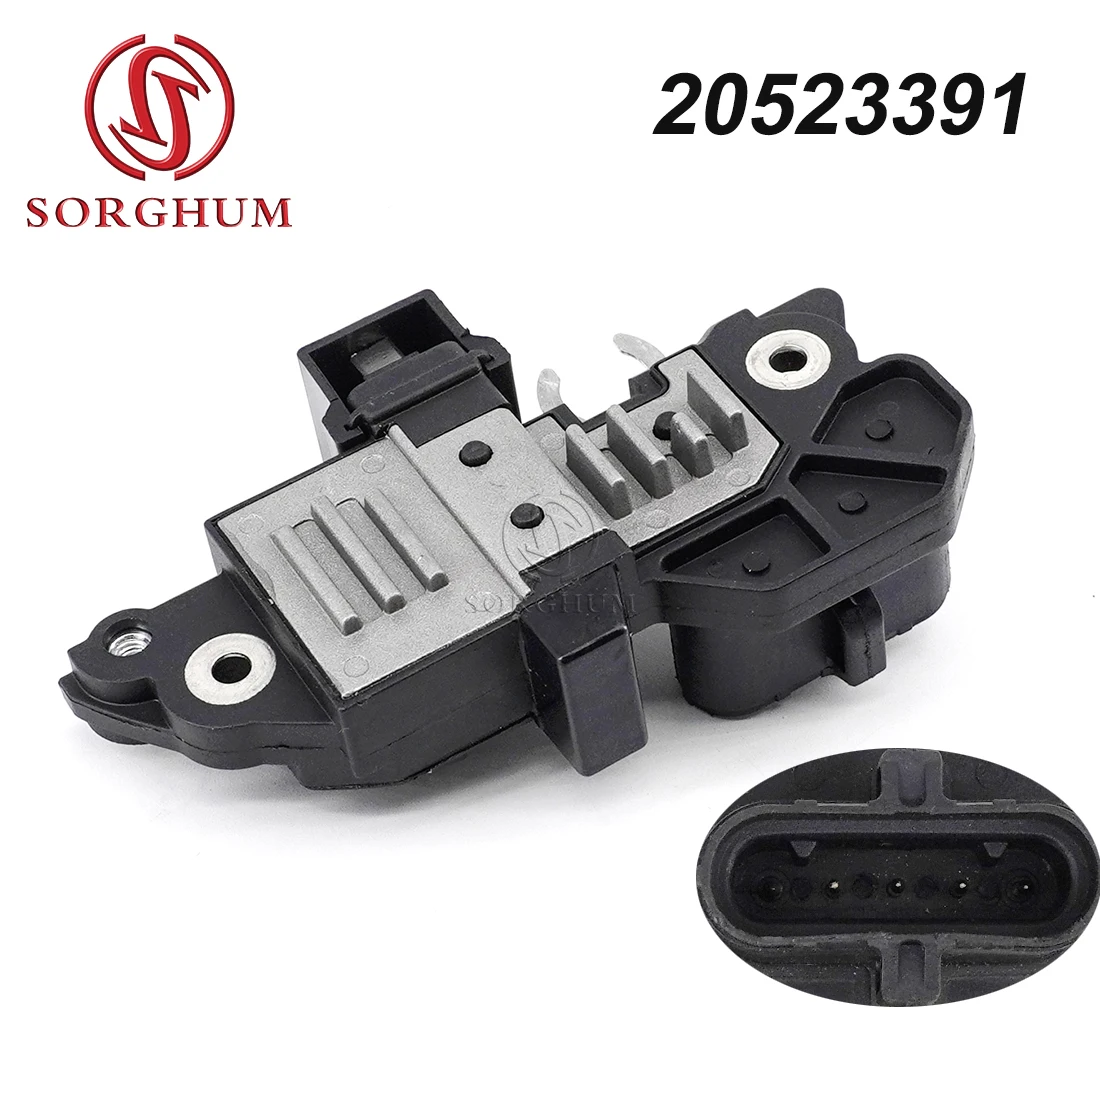 

SORGHUM New Alternator Voltage Regulator 24V for Volvo Truck & Machinery 20523391 F00M144119 Replacement Automotive Accessories